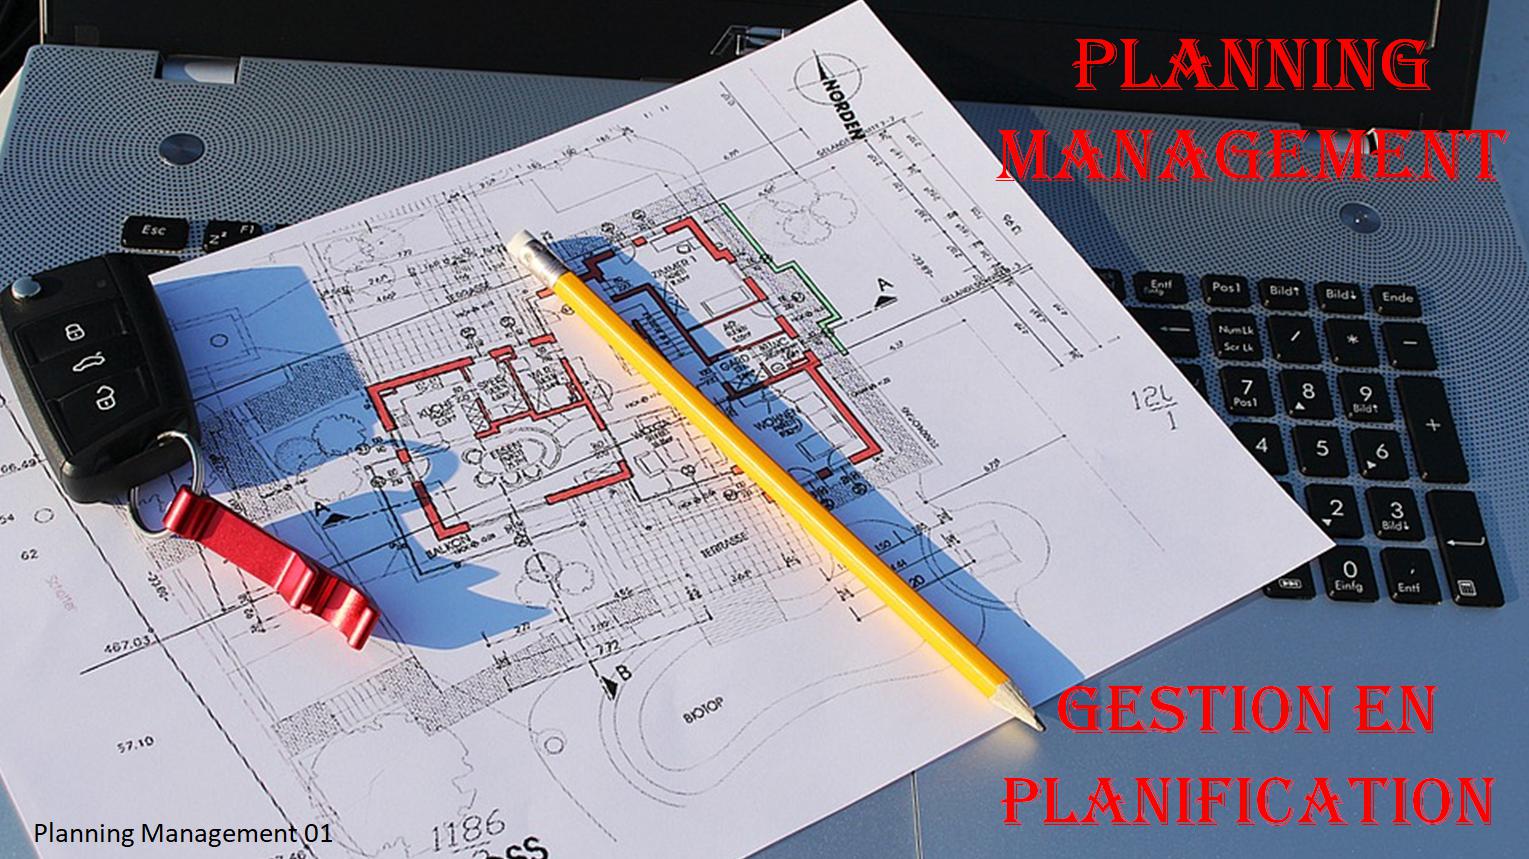 Planning management 01